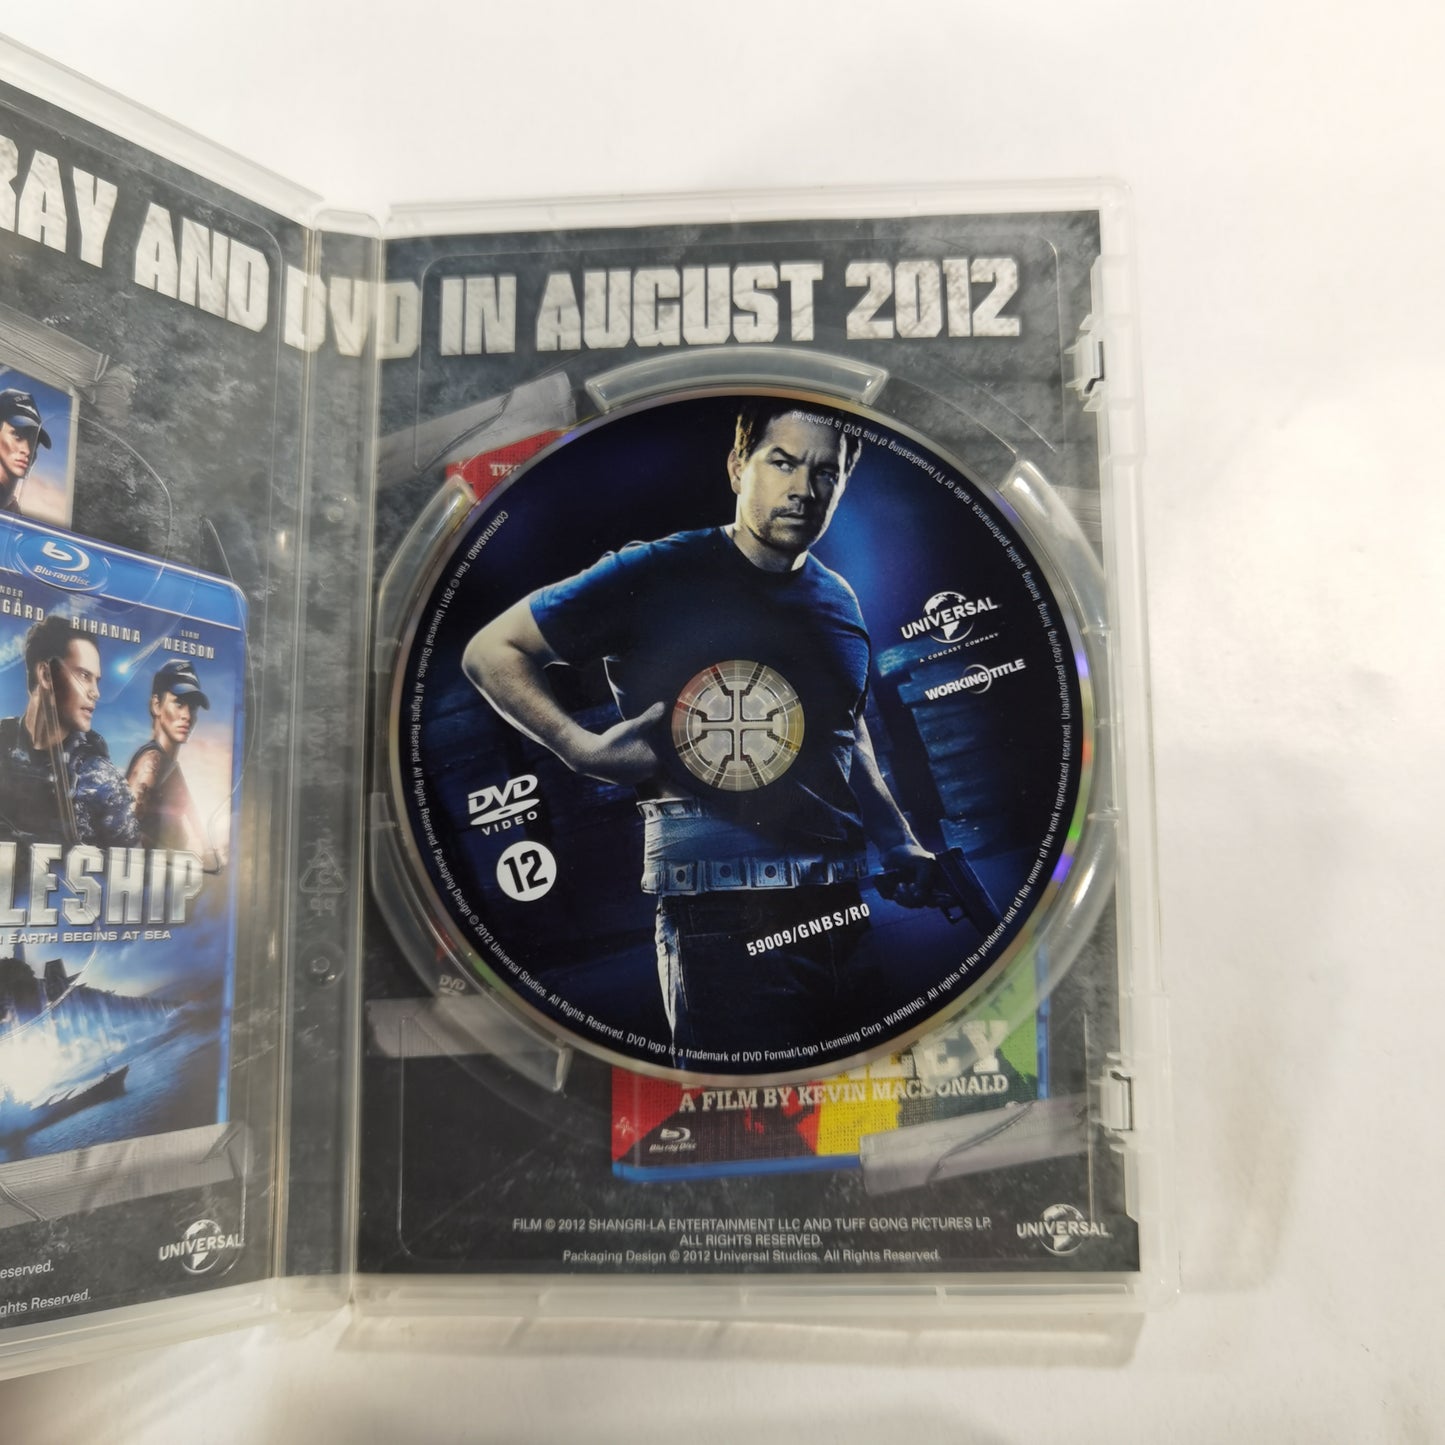 Contraband (2012) - DVD SE 2012